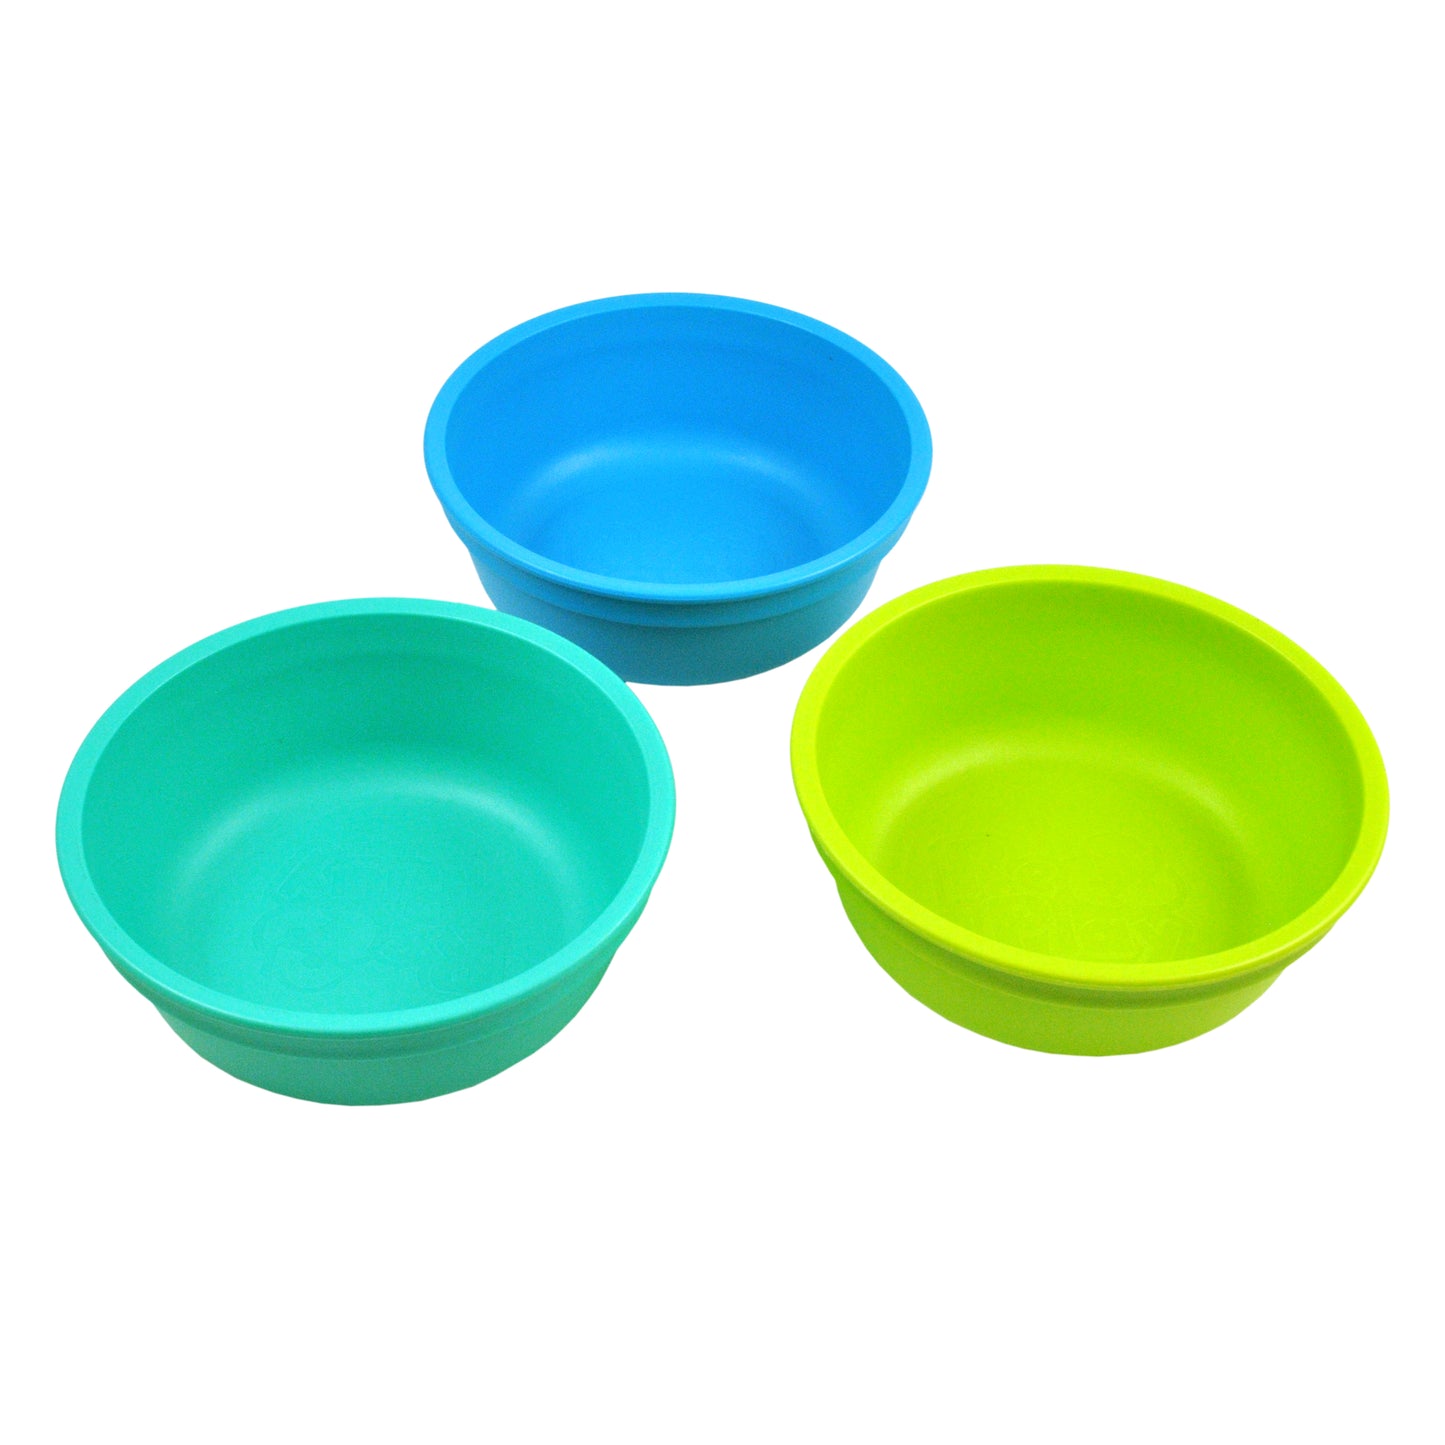 Re-Play Bowls Set -  Aqua, Sky Blue & Lime Green